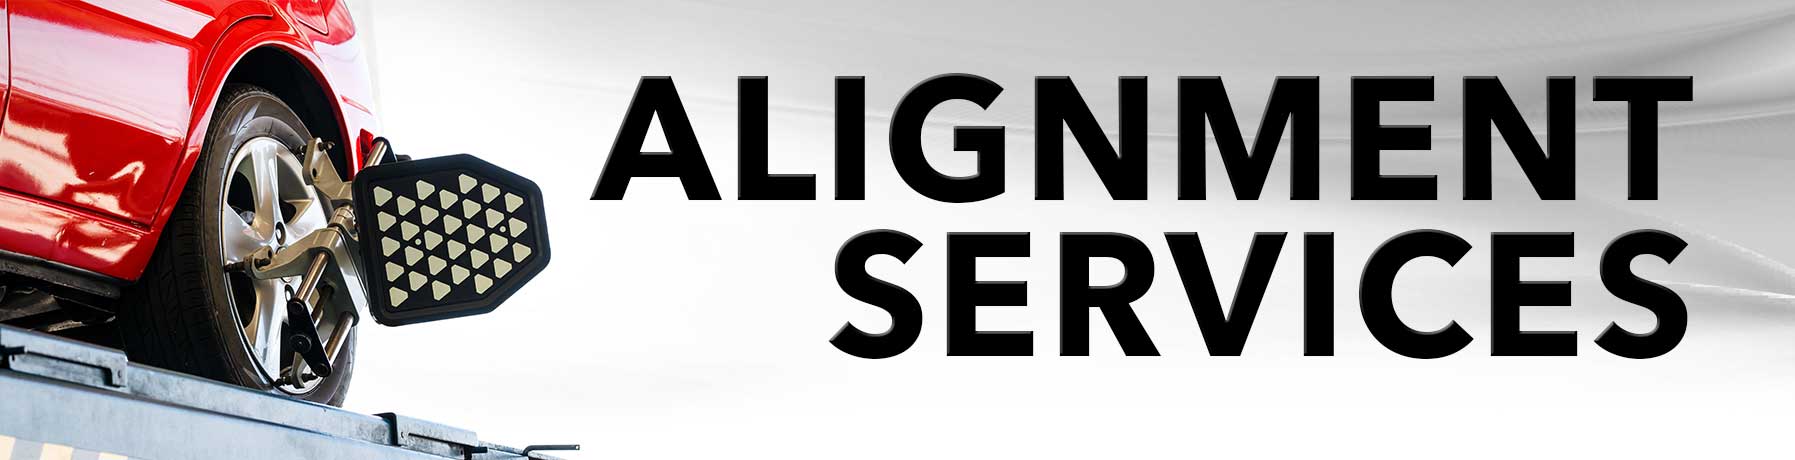 alignment-services